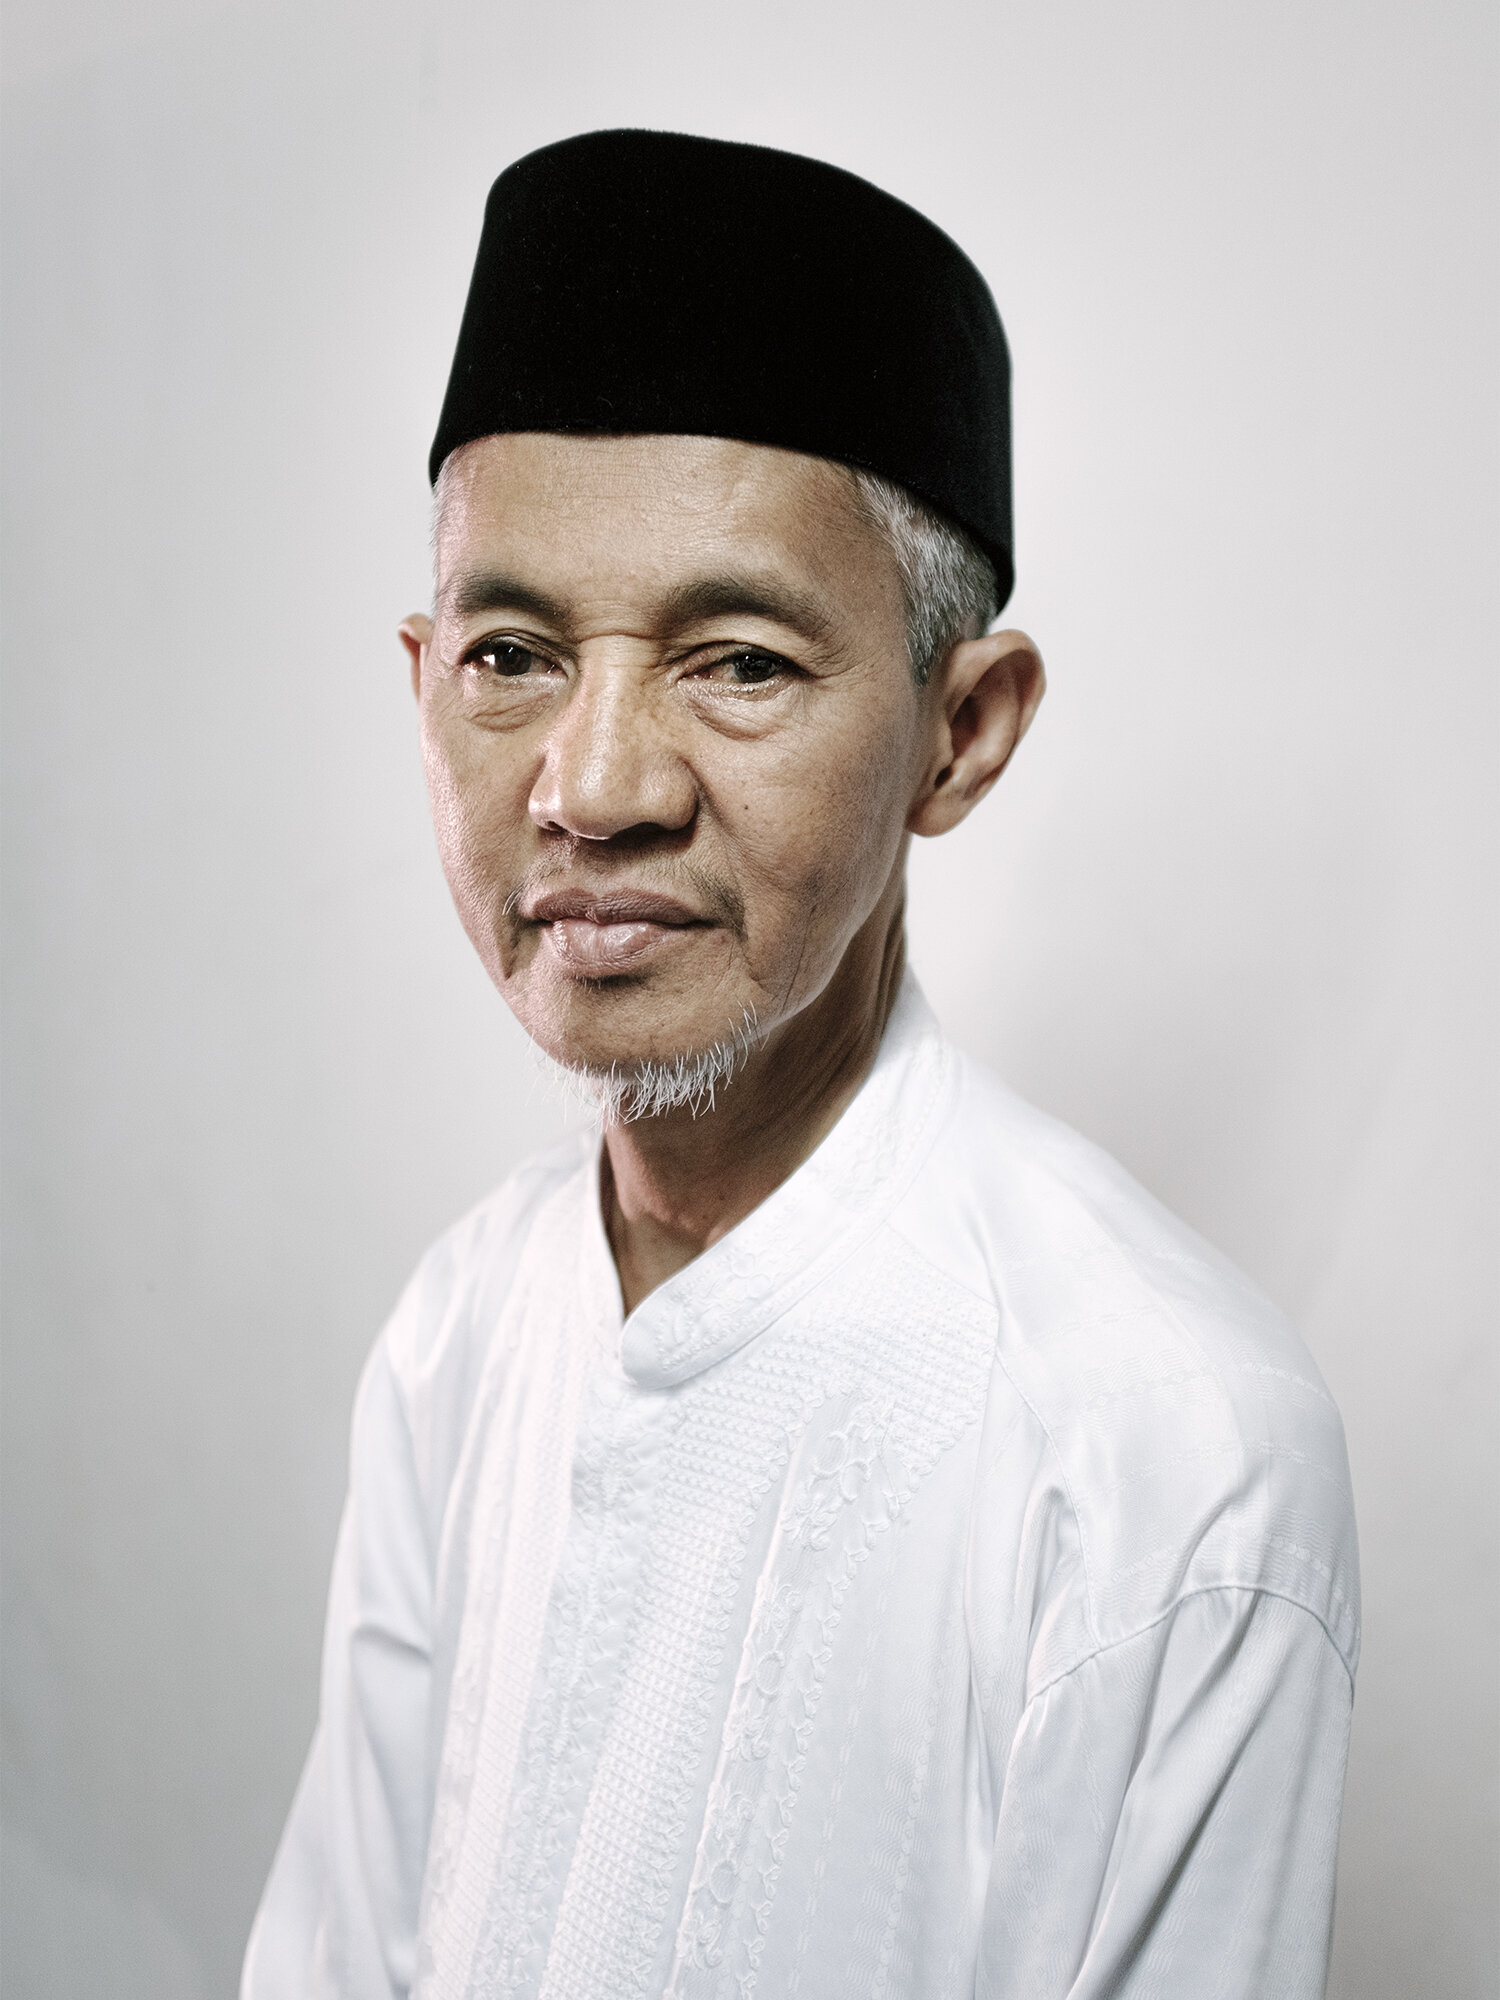 INDONESIAN EMBASSY OF BELGIUM